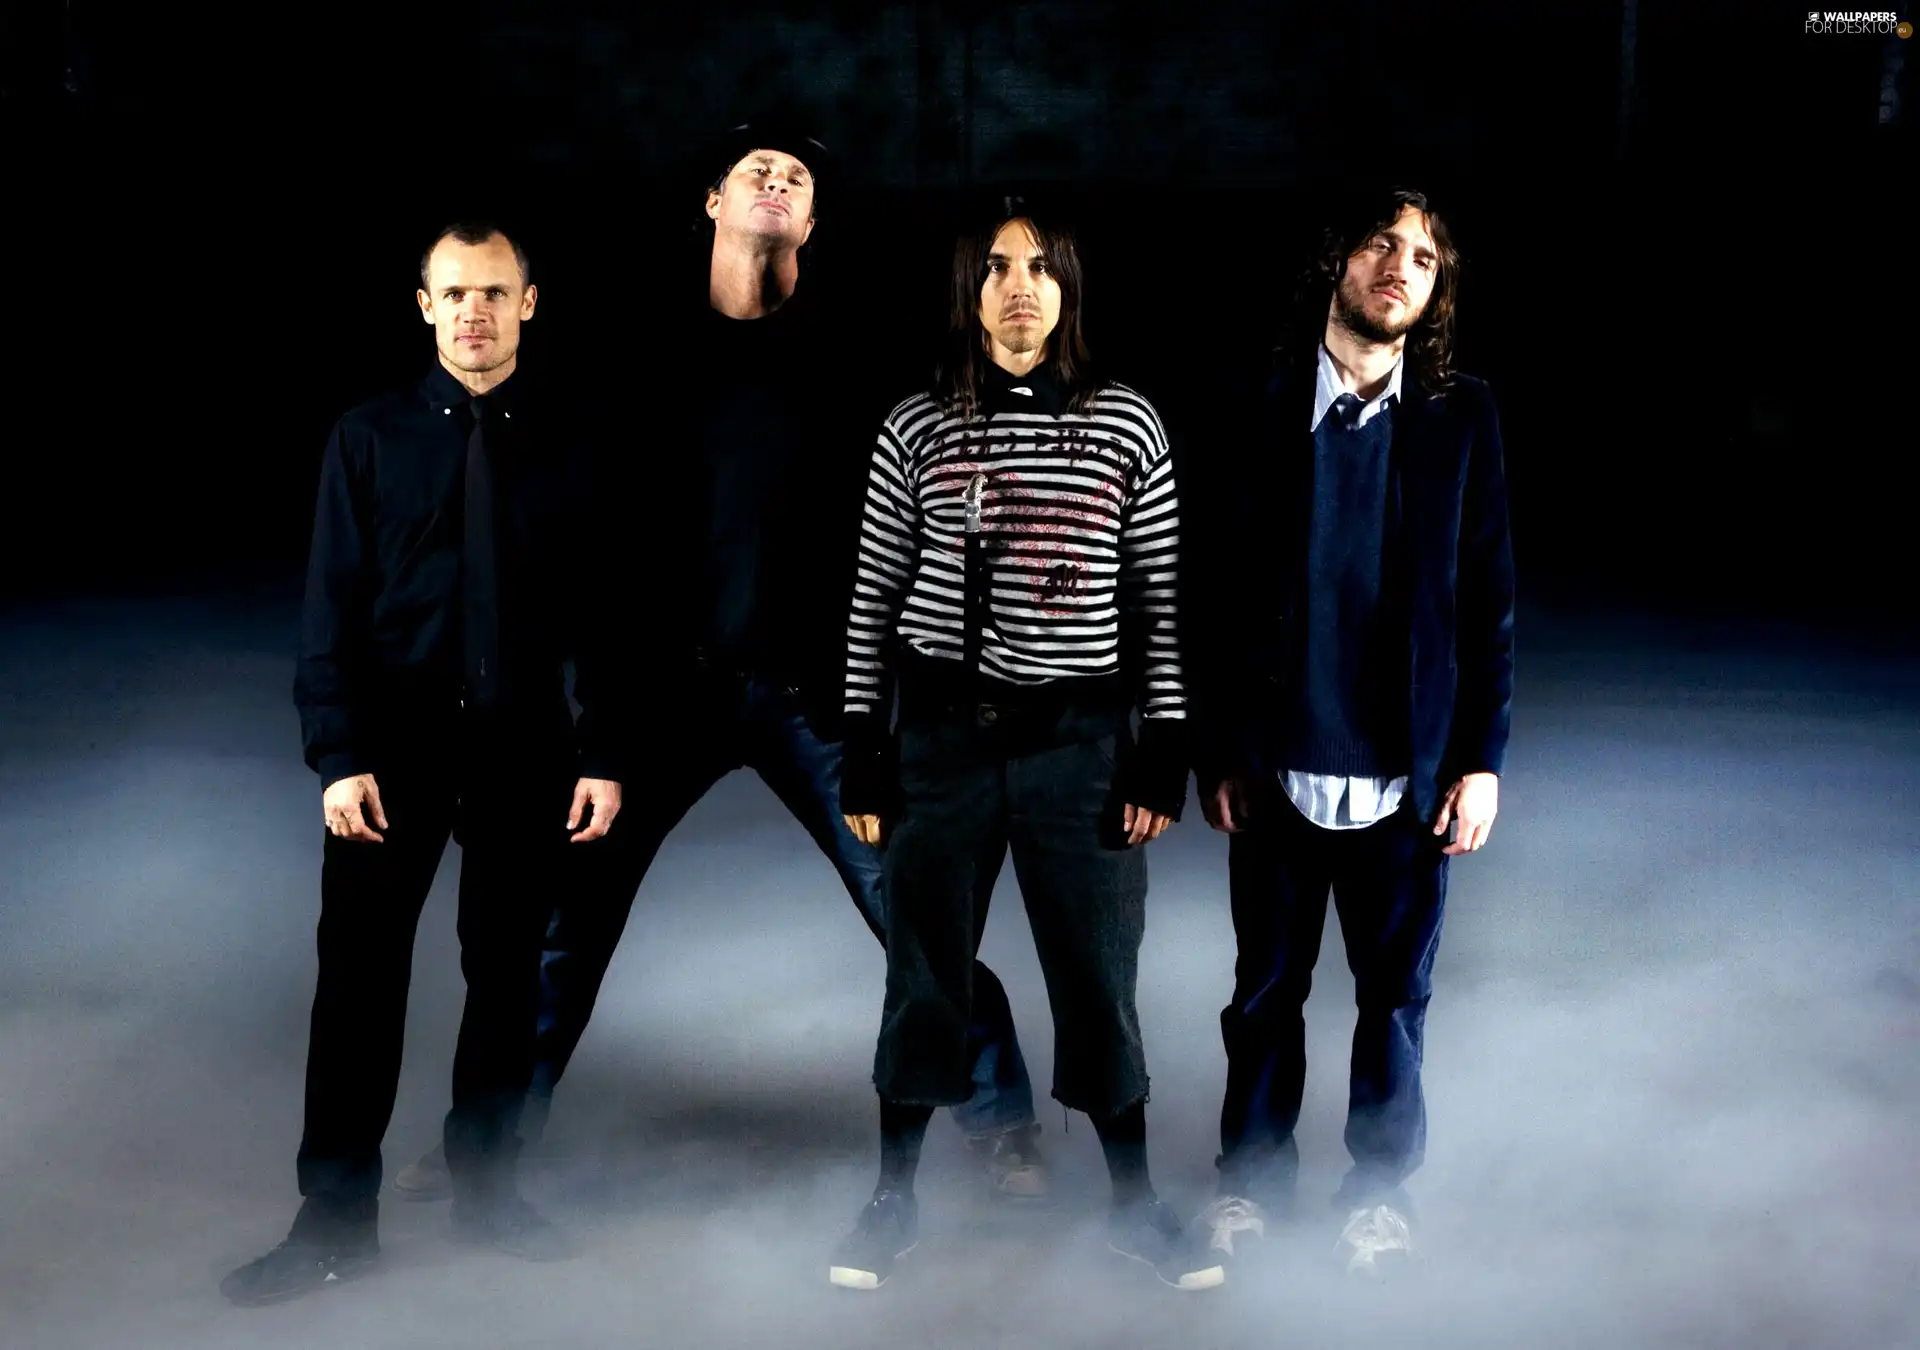 Flea, Anthony Kiedis, John Frusciante, Chad Smith